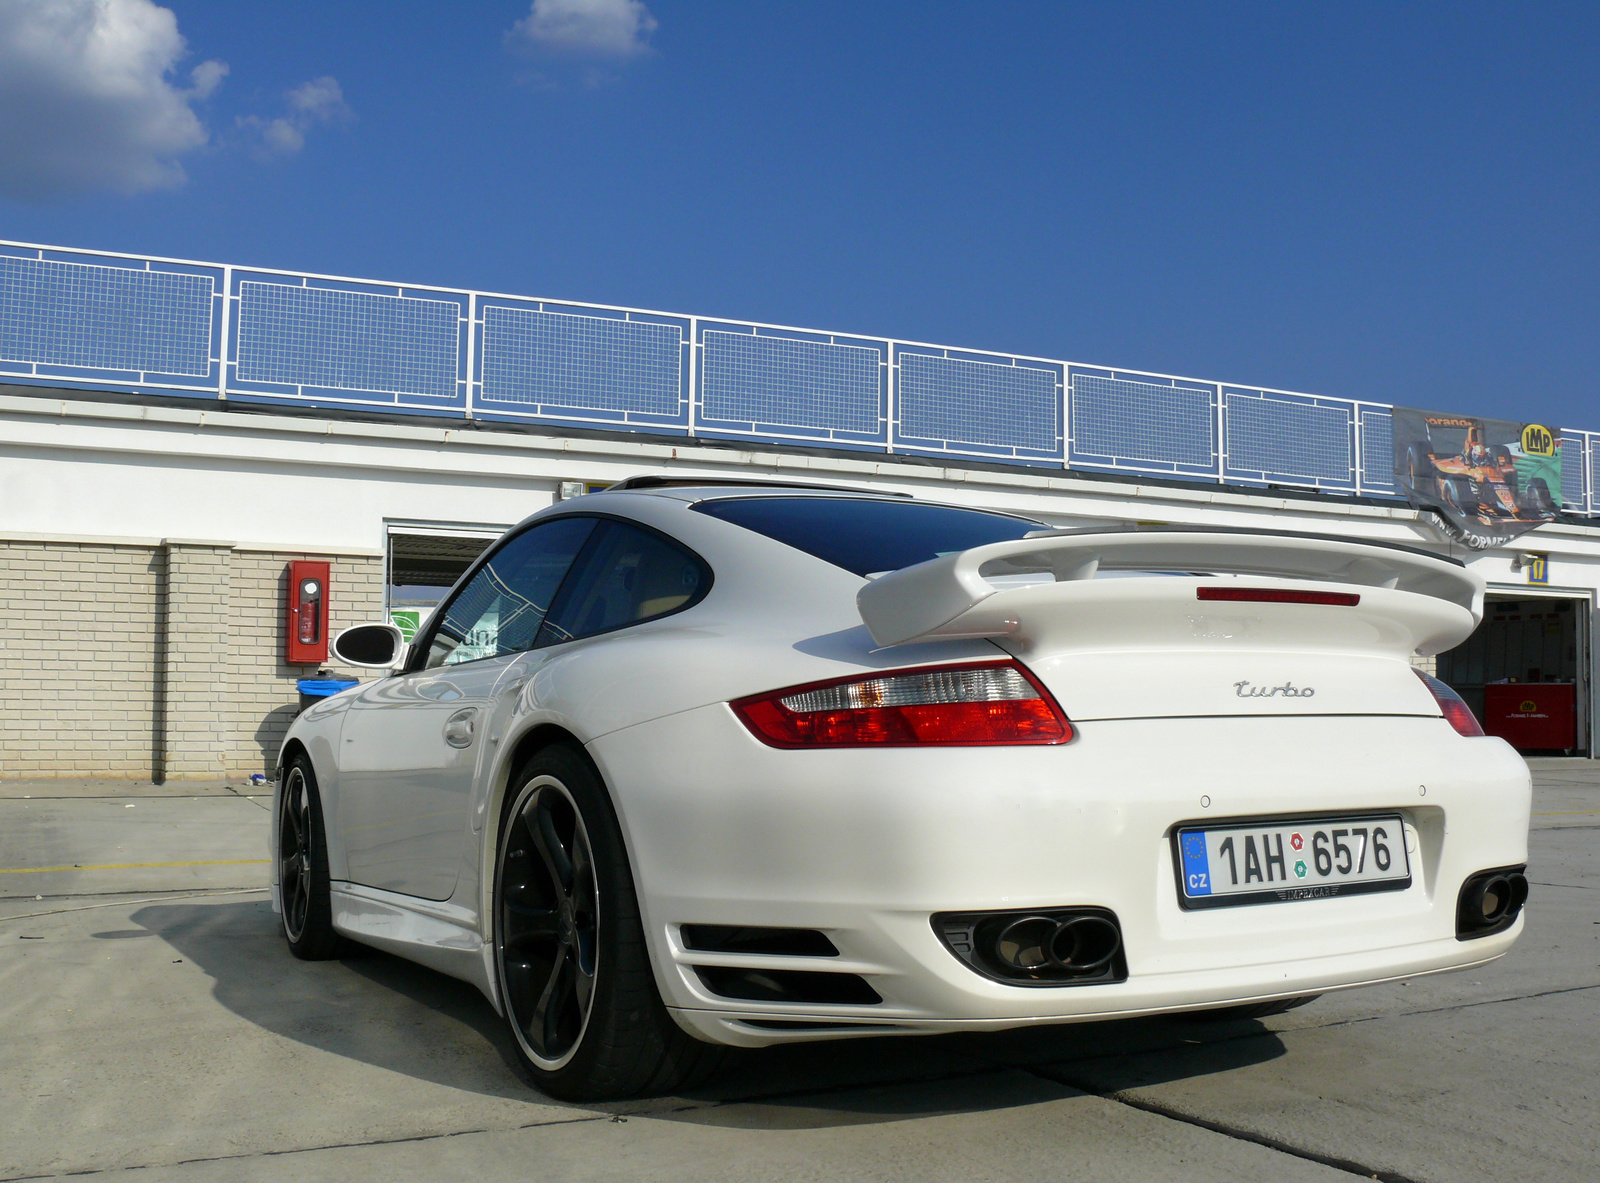 Porsche 911 Turbo (997) (Techart)